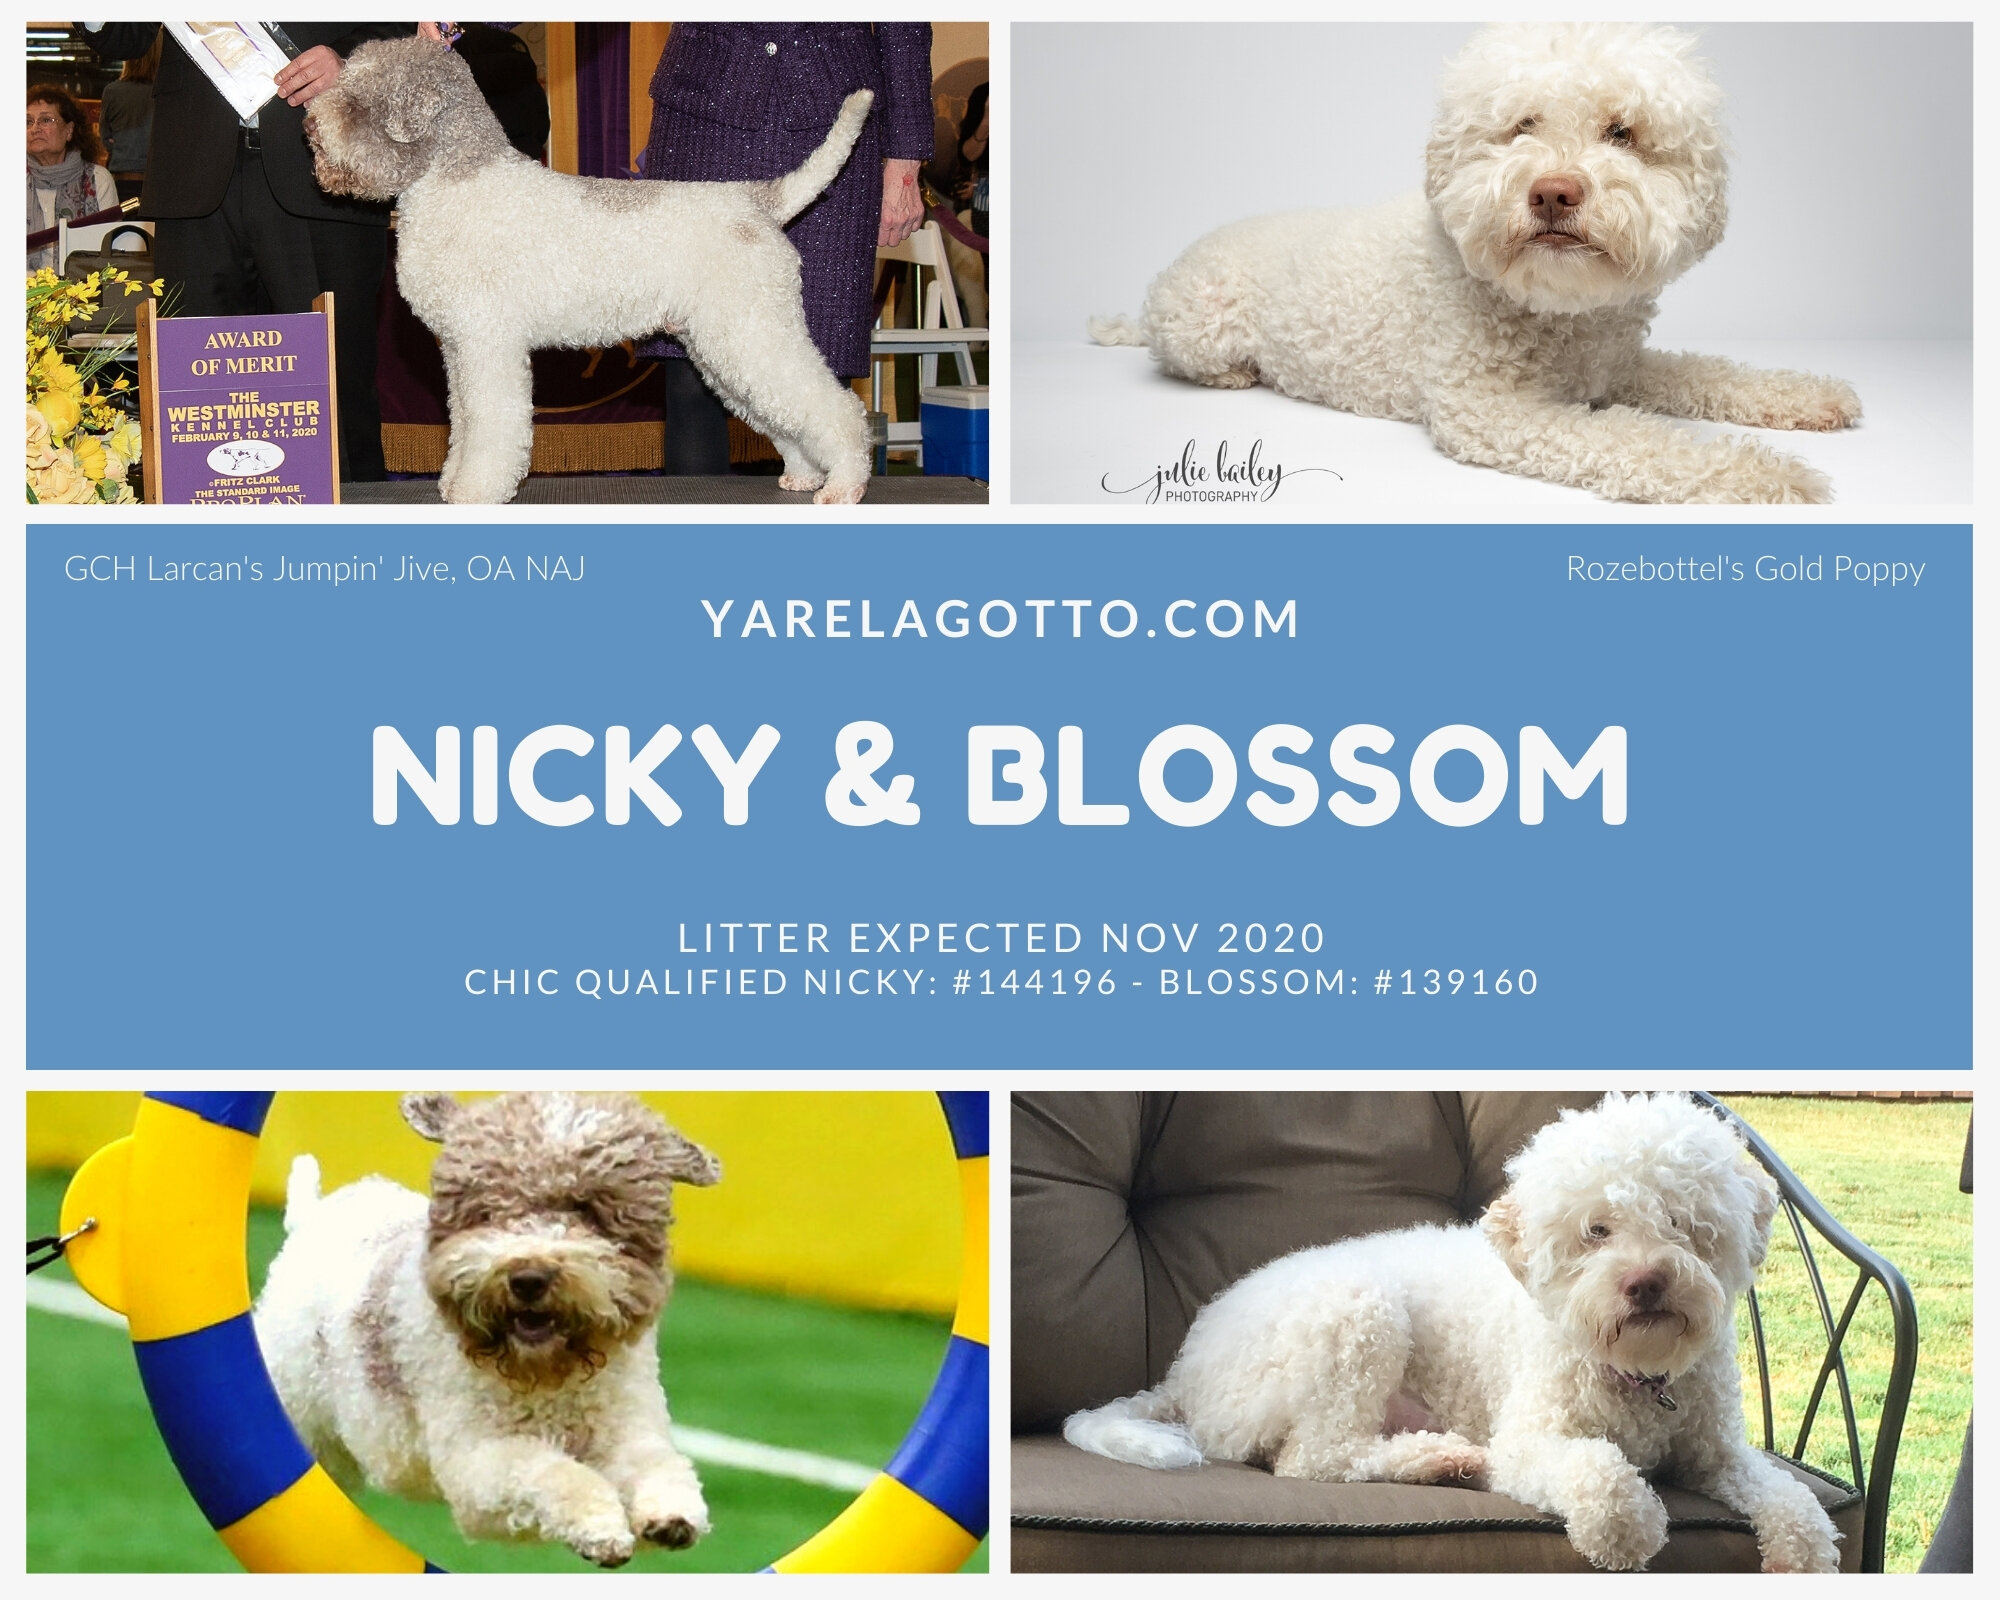 Nicky x Blossom Photo Collage 2.jpg